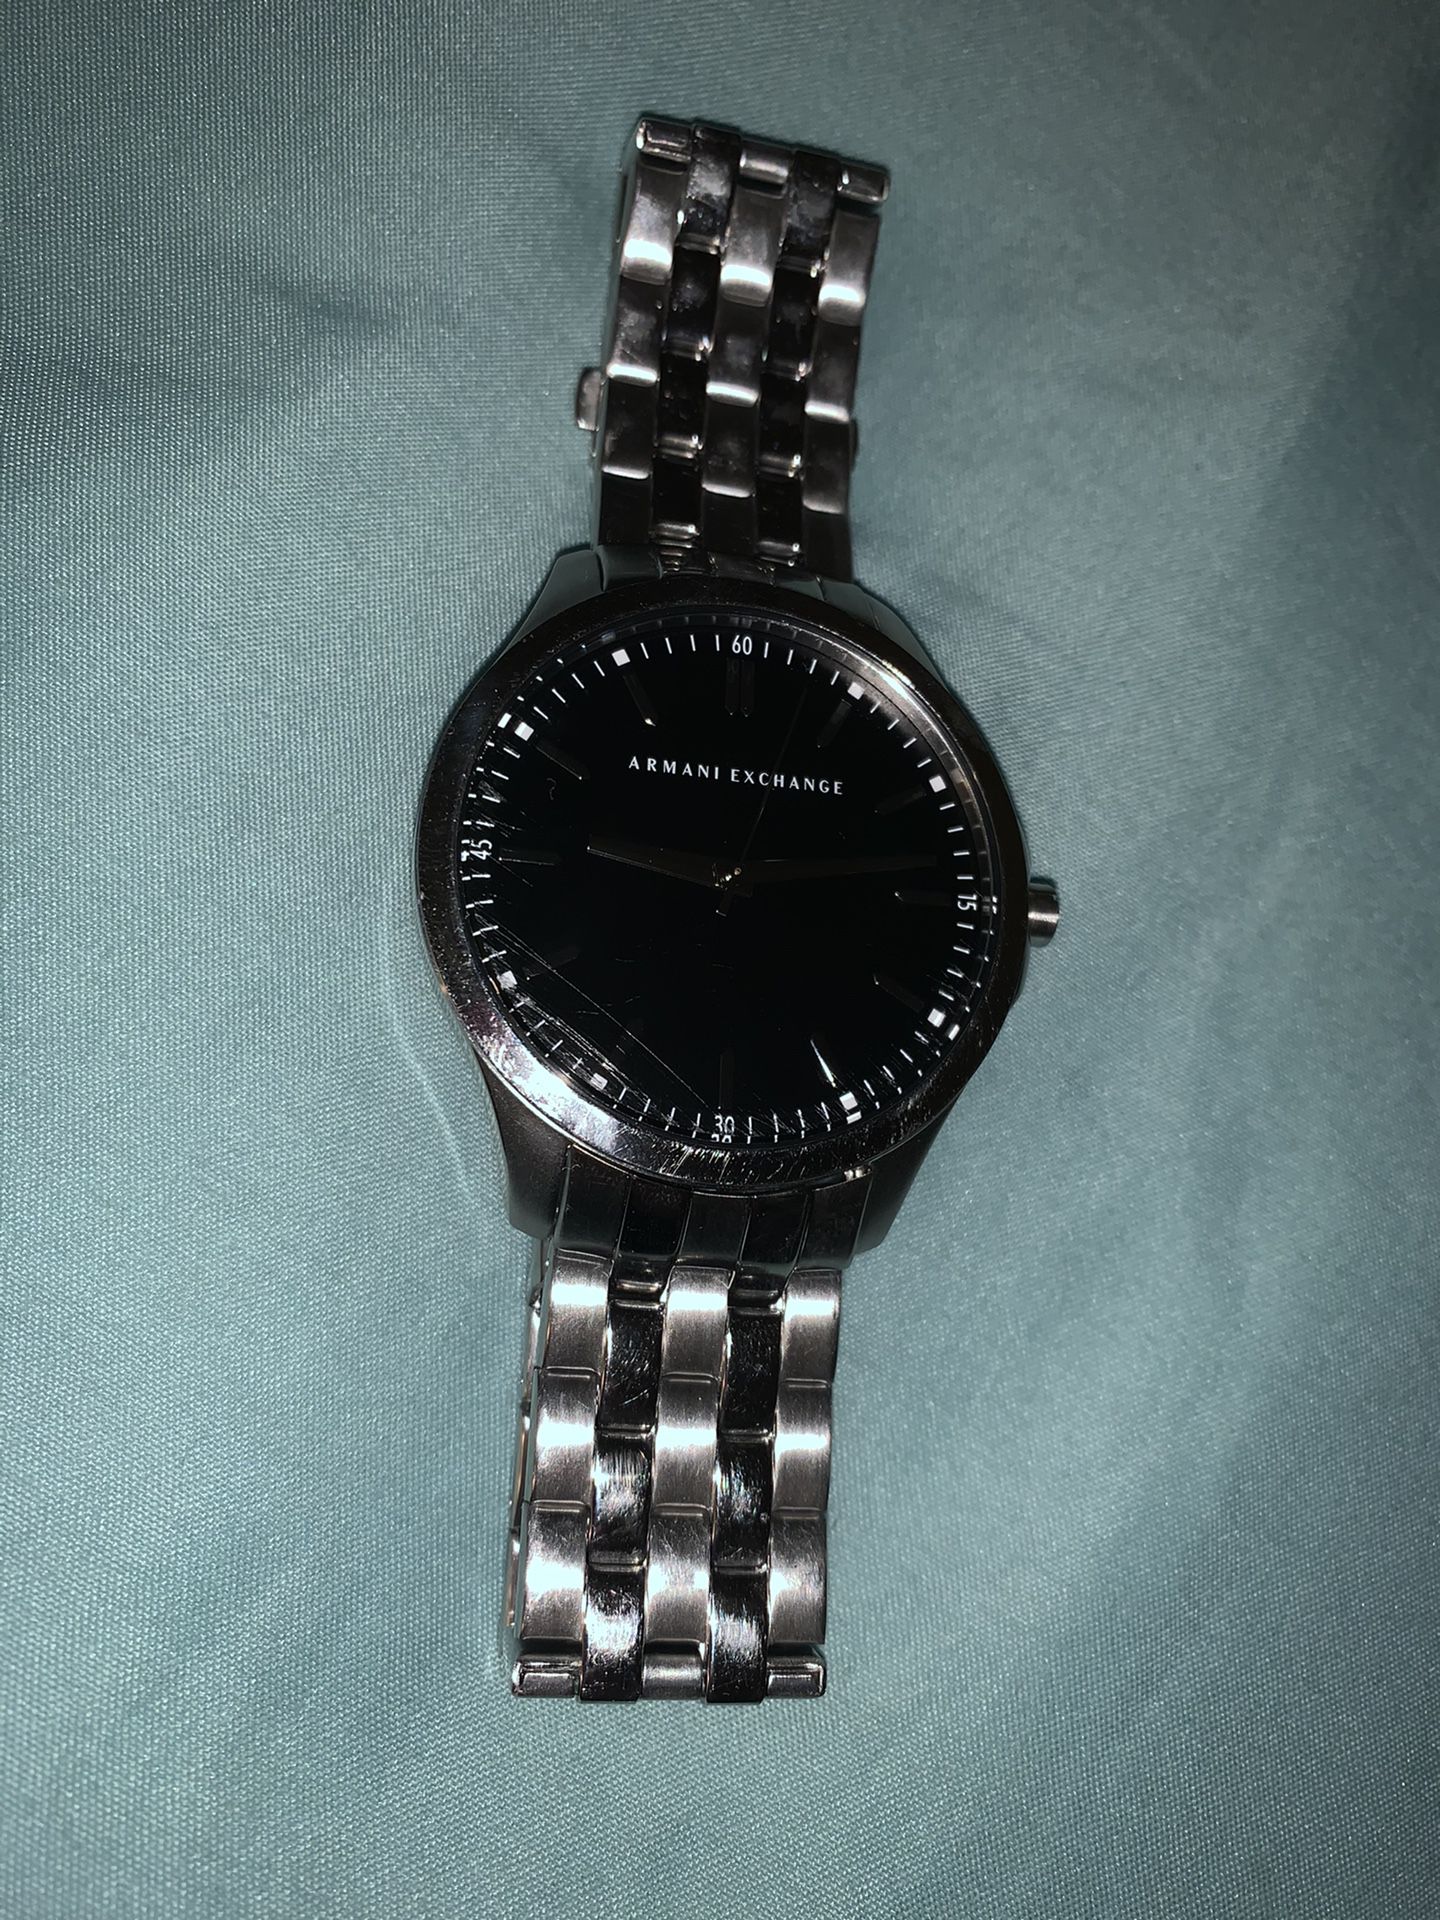 Authentic Armani Exchange watch. $50 OBO.